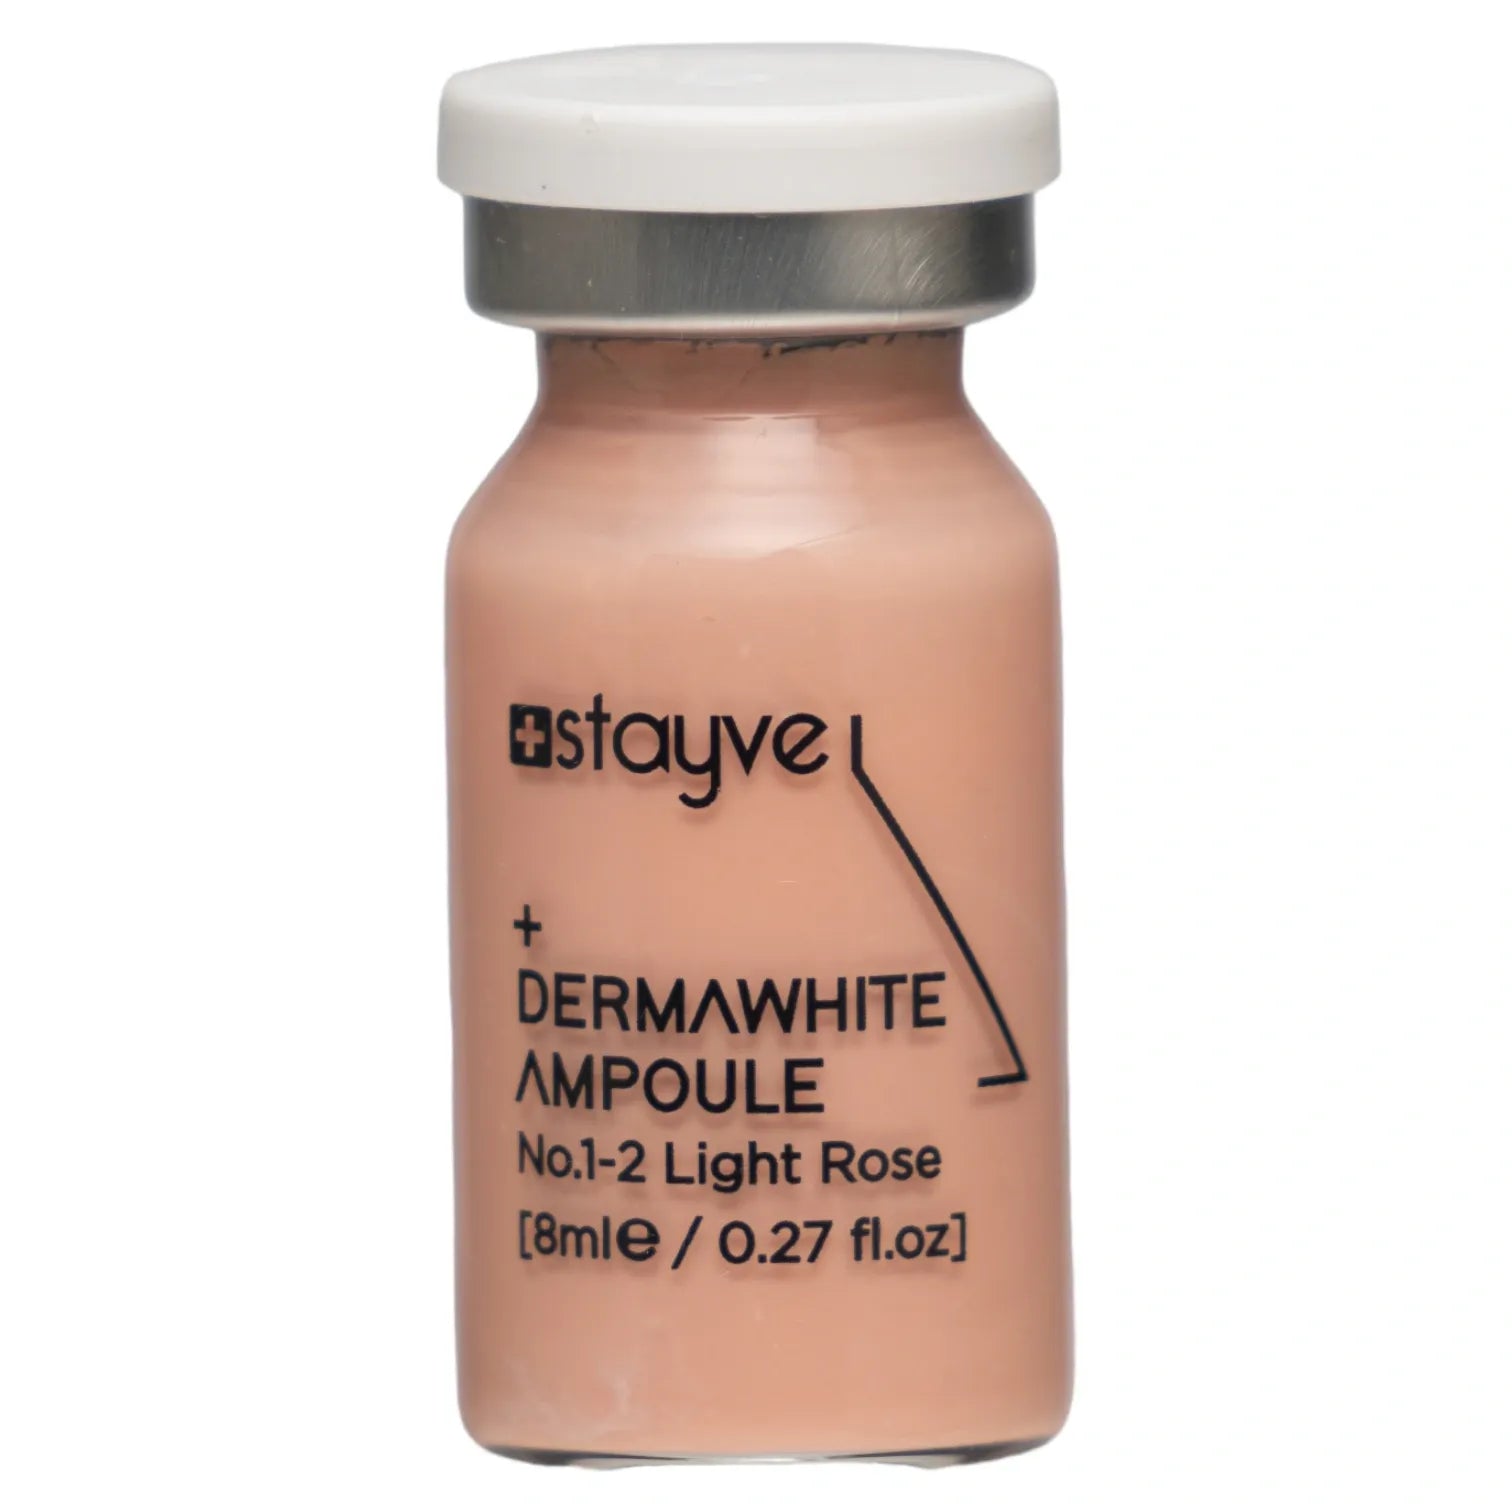 Stayve DermaWhite Light Rose No. 1-2 BB Glow Ampoule Kit